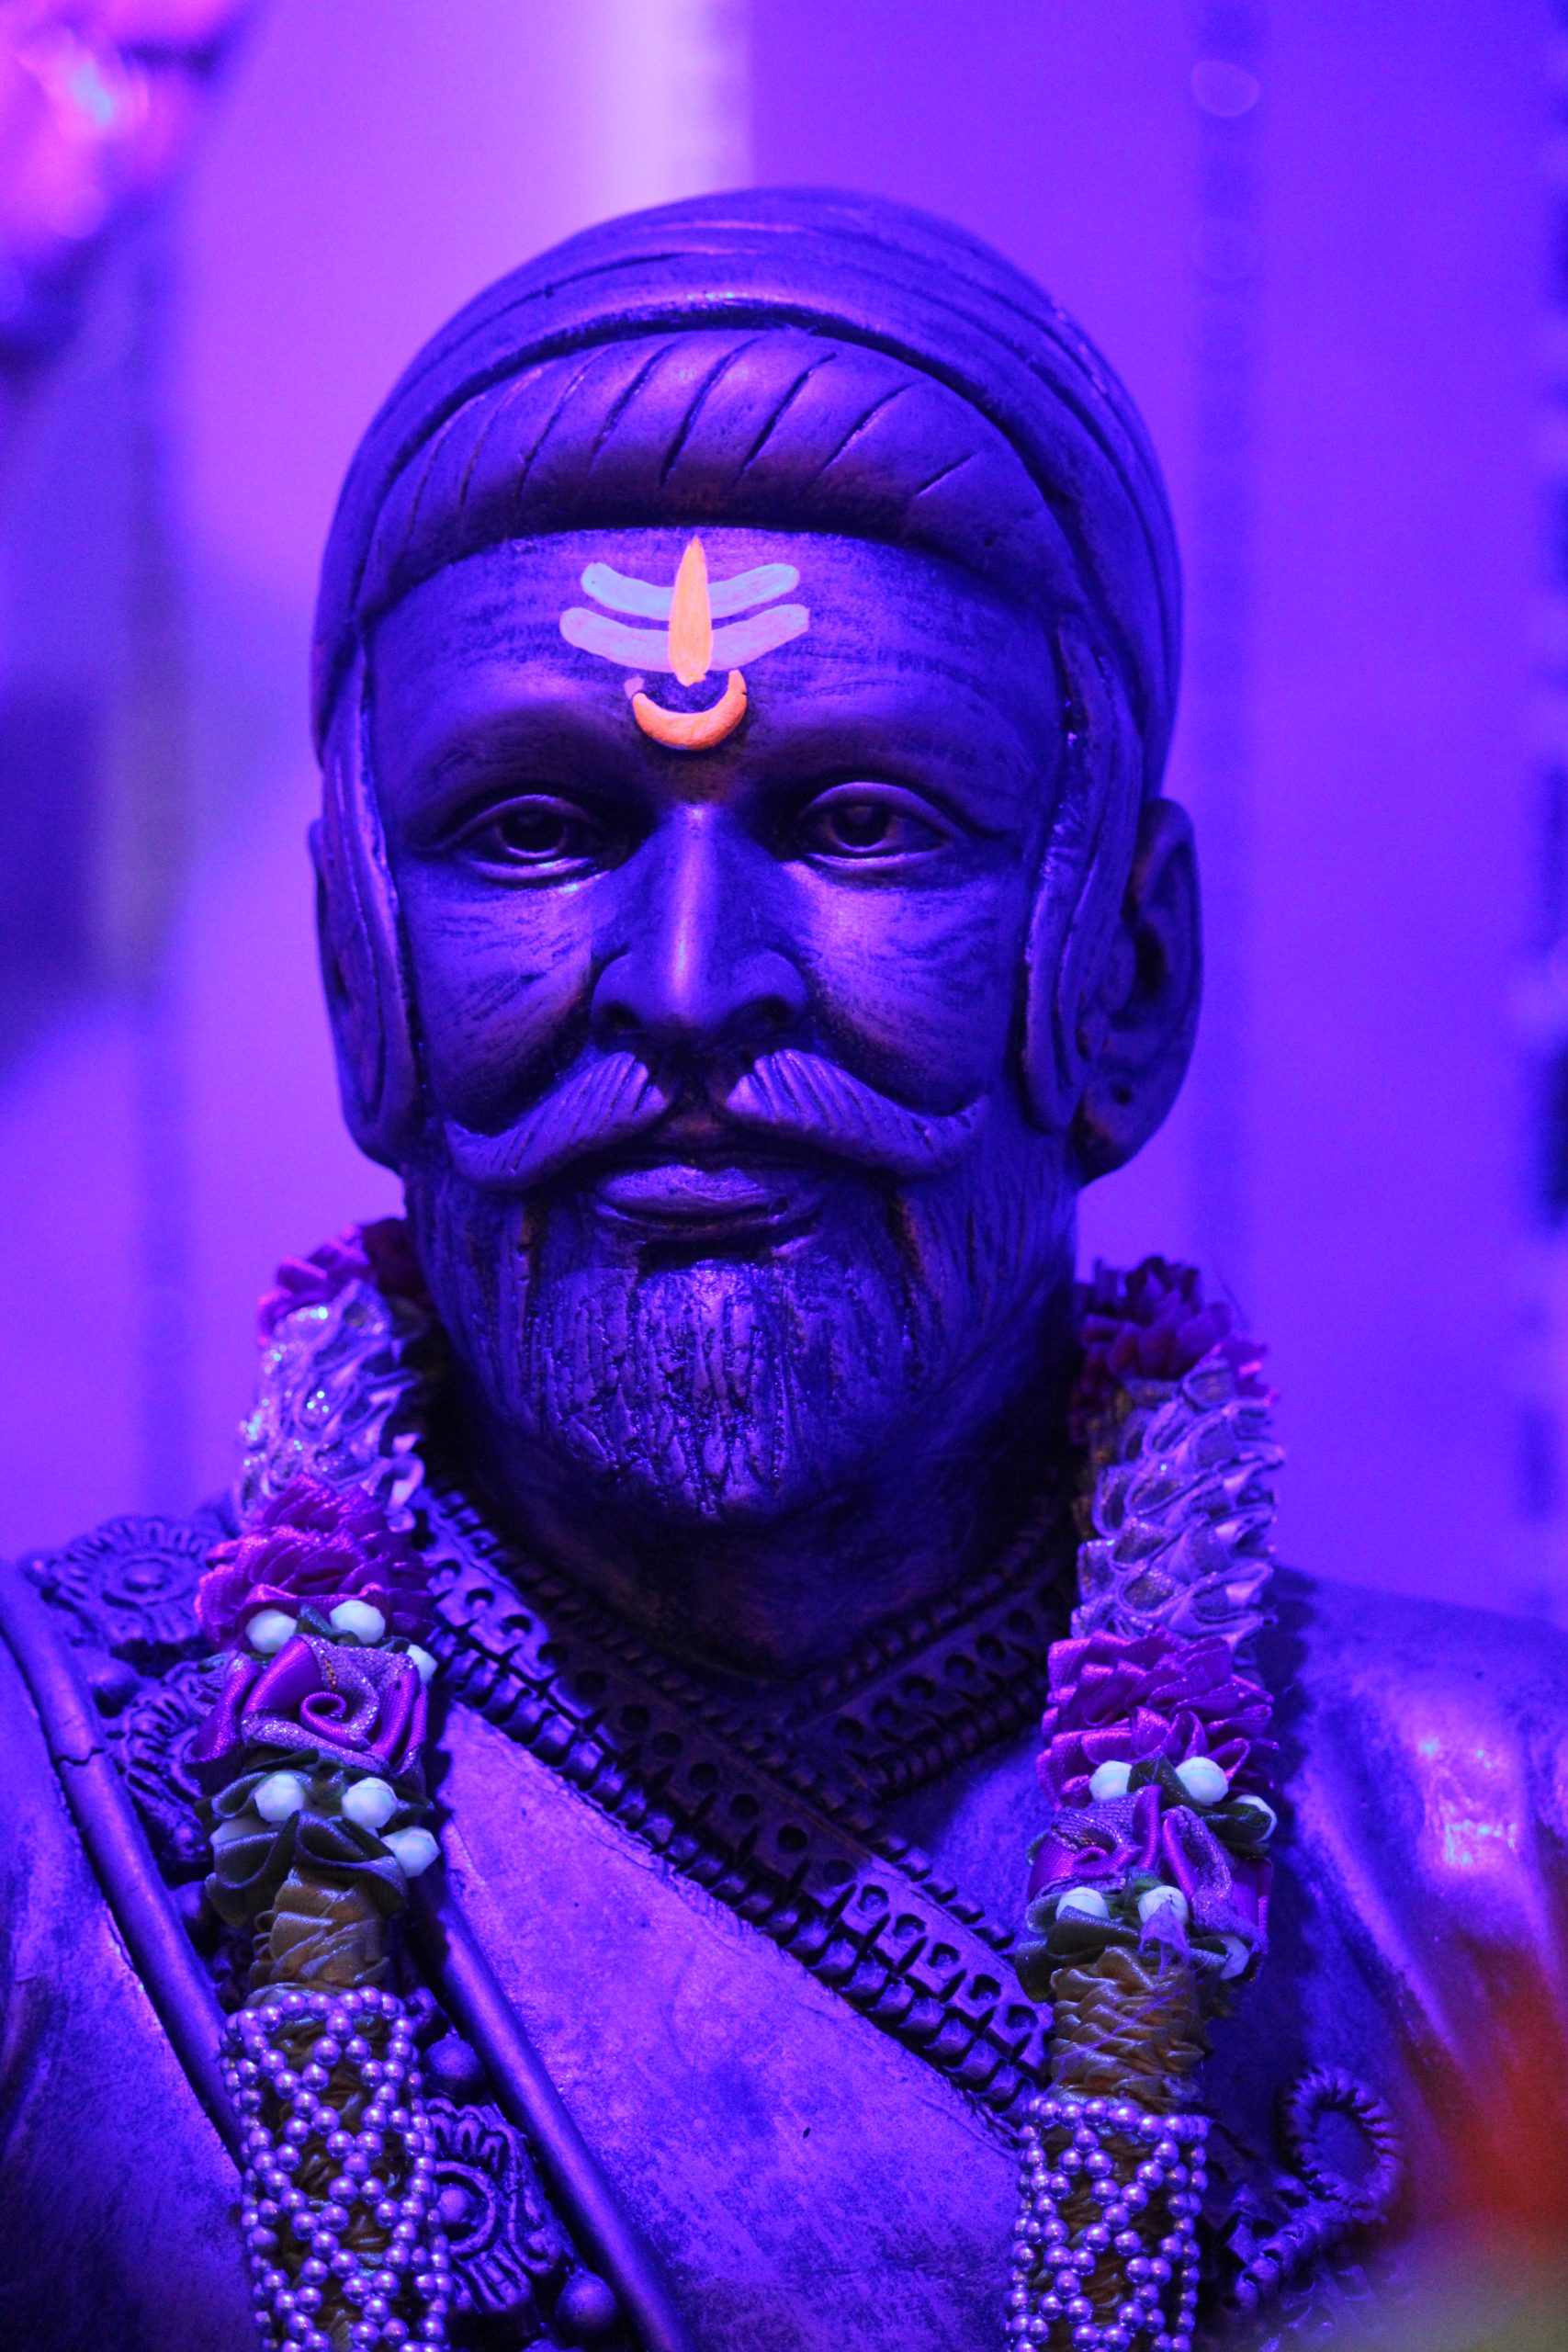 The king - Chatrapati Shivaji Maharaj.